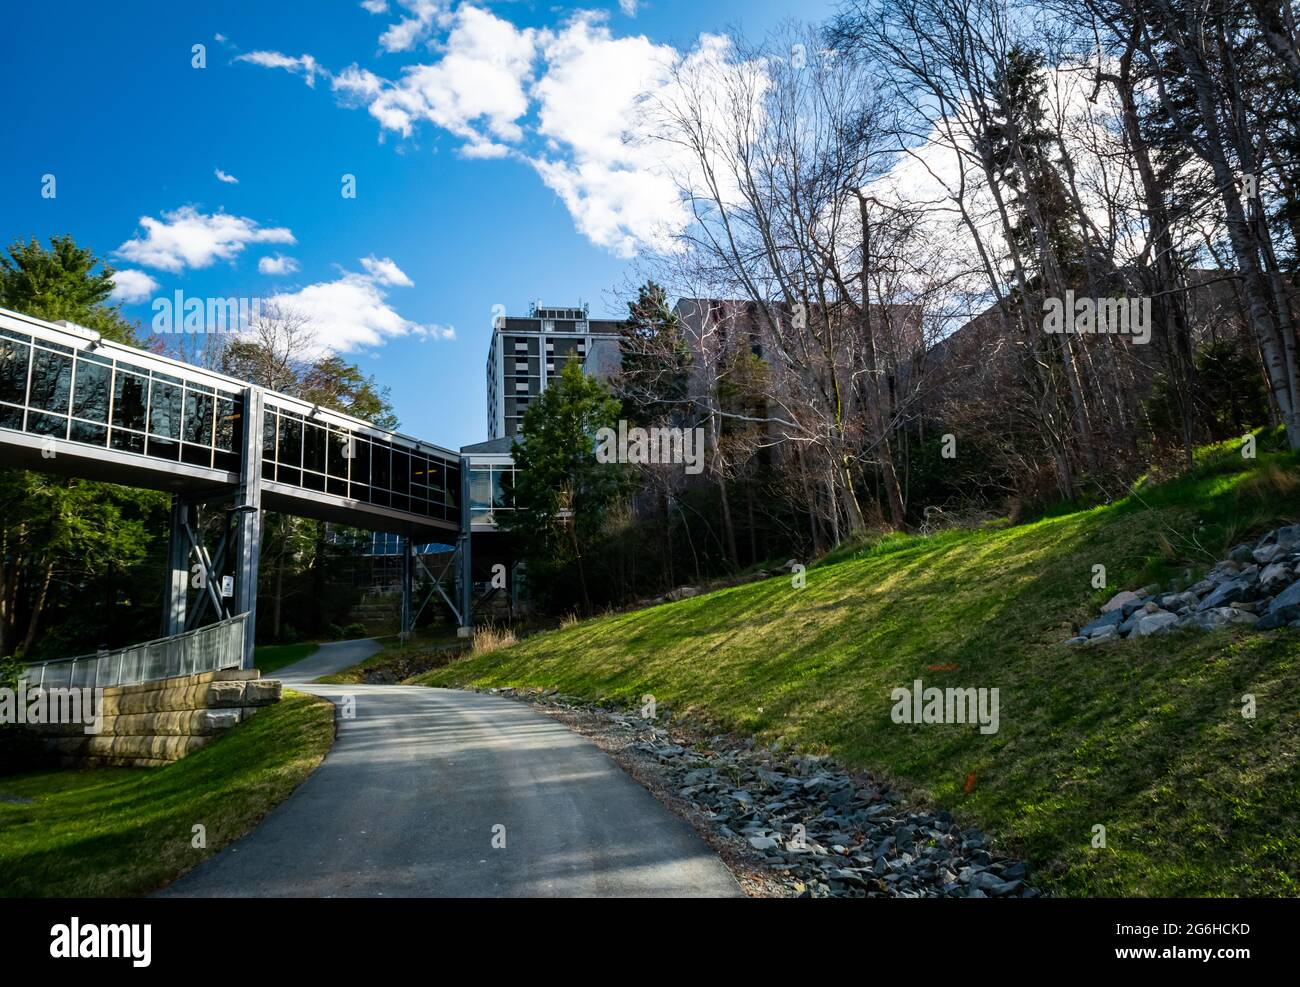 pathway through the campus of mount saint vincent university Stock Photo